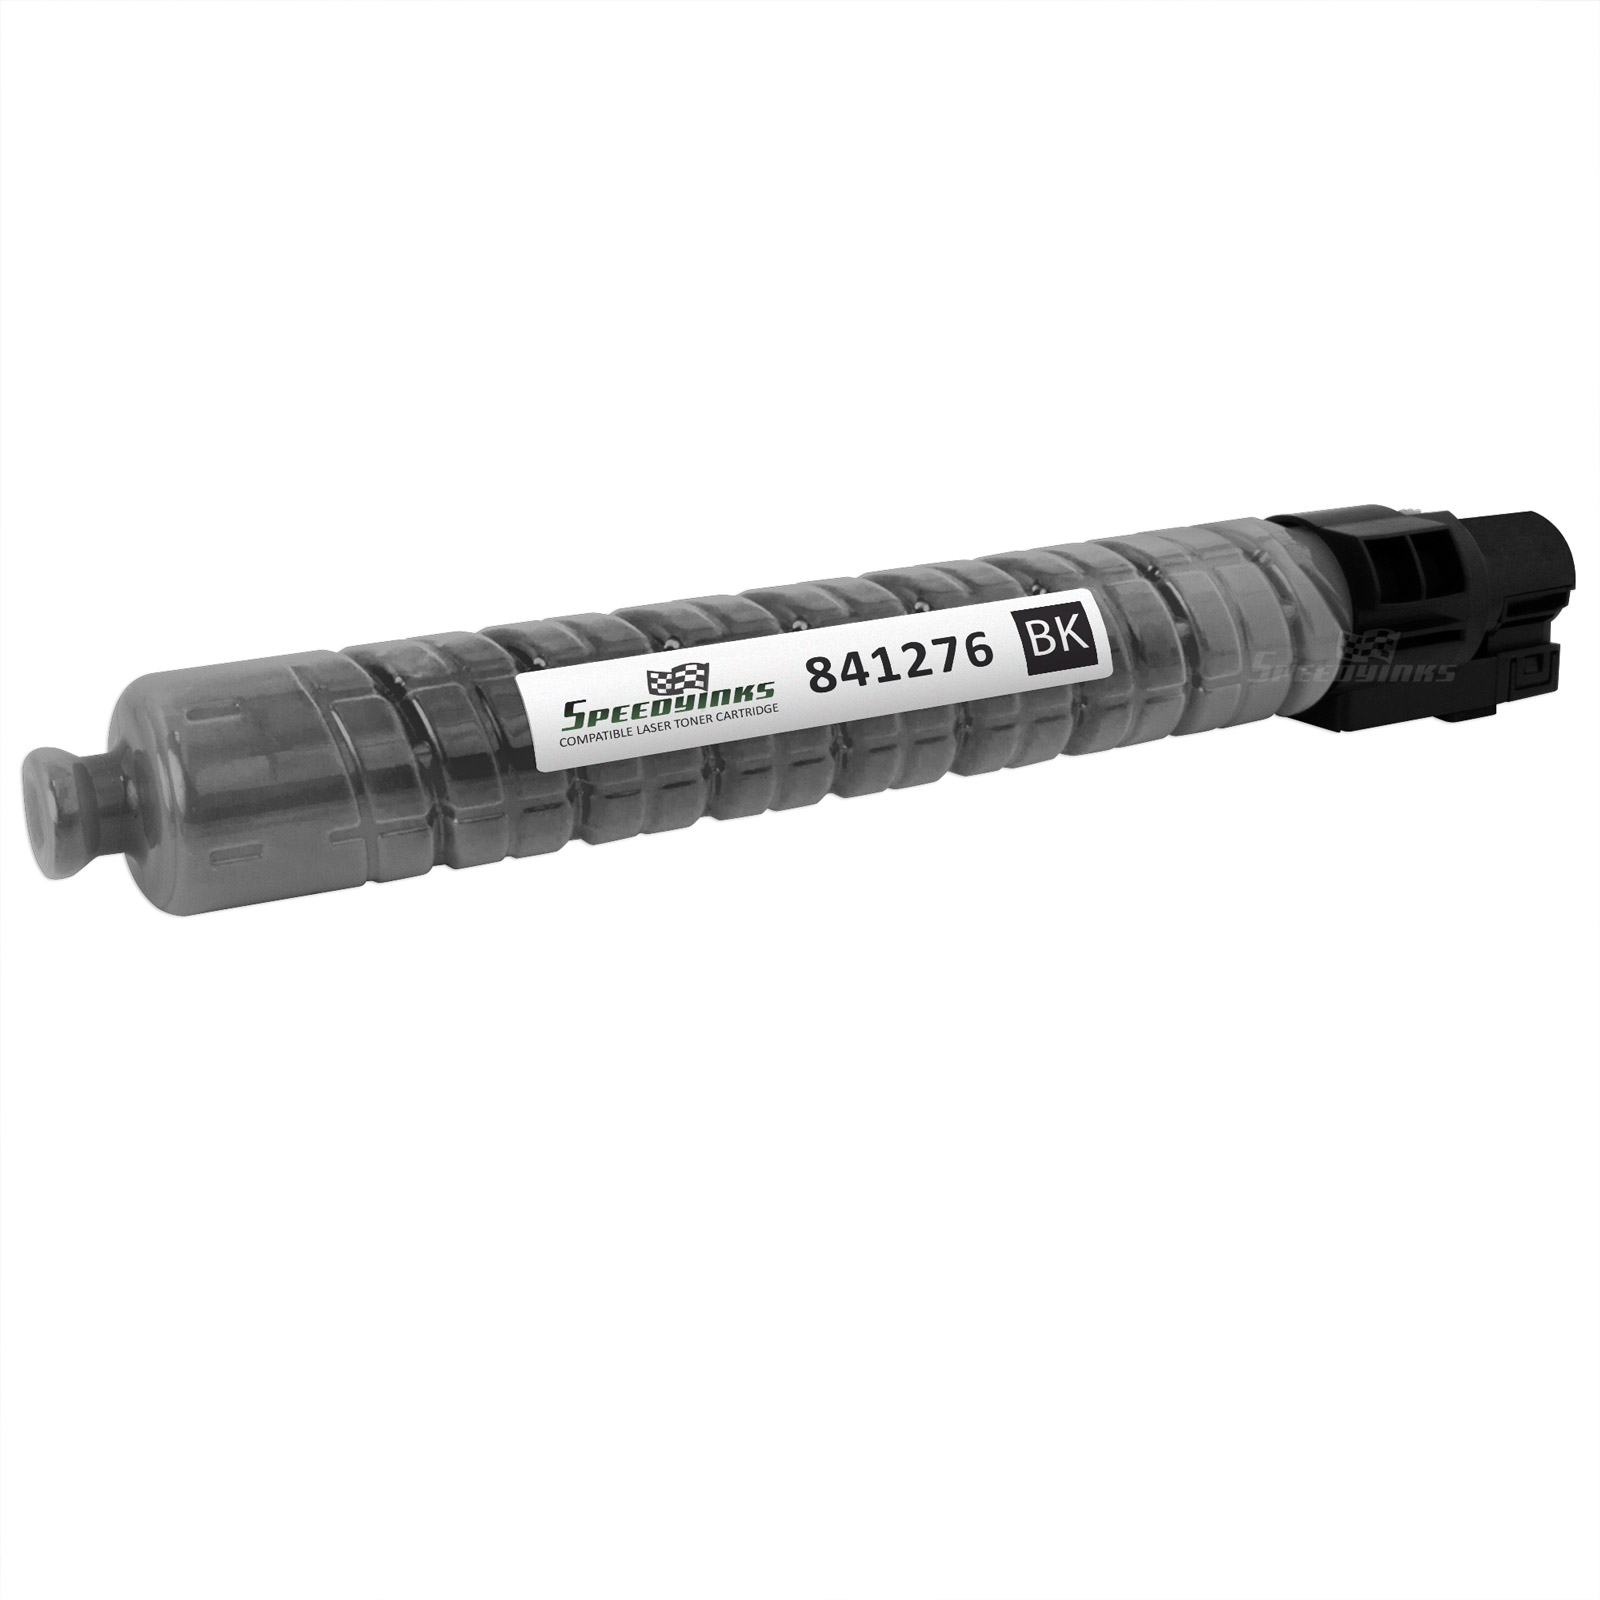 Ricoh Compatible 841276 Black Laser Toner Cartridge for use in Ricoh Aficio MP C2800, Ricoh Aficio MP C3300, Ricoh Aficio MP C2800SPF, Ricoh Aficio MP C3300SPF, Gestetner MPC2800 - image 5 of 5